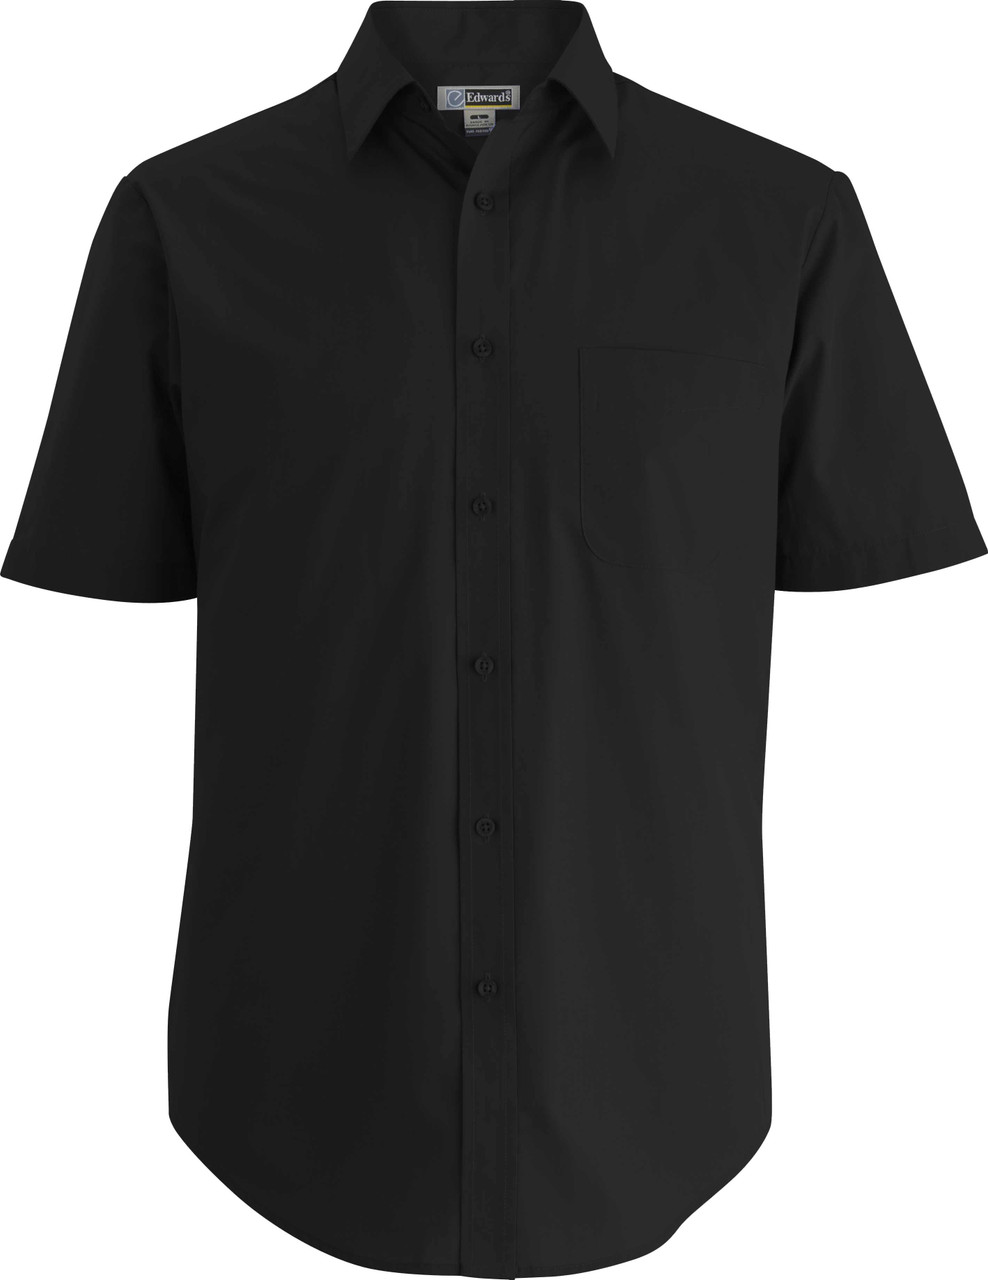 Durable Work Shirt | Employee Shirt | WaitStuff Uniforms